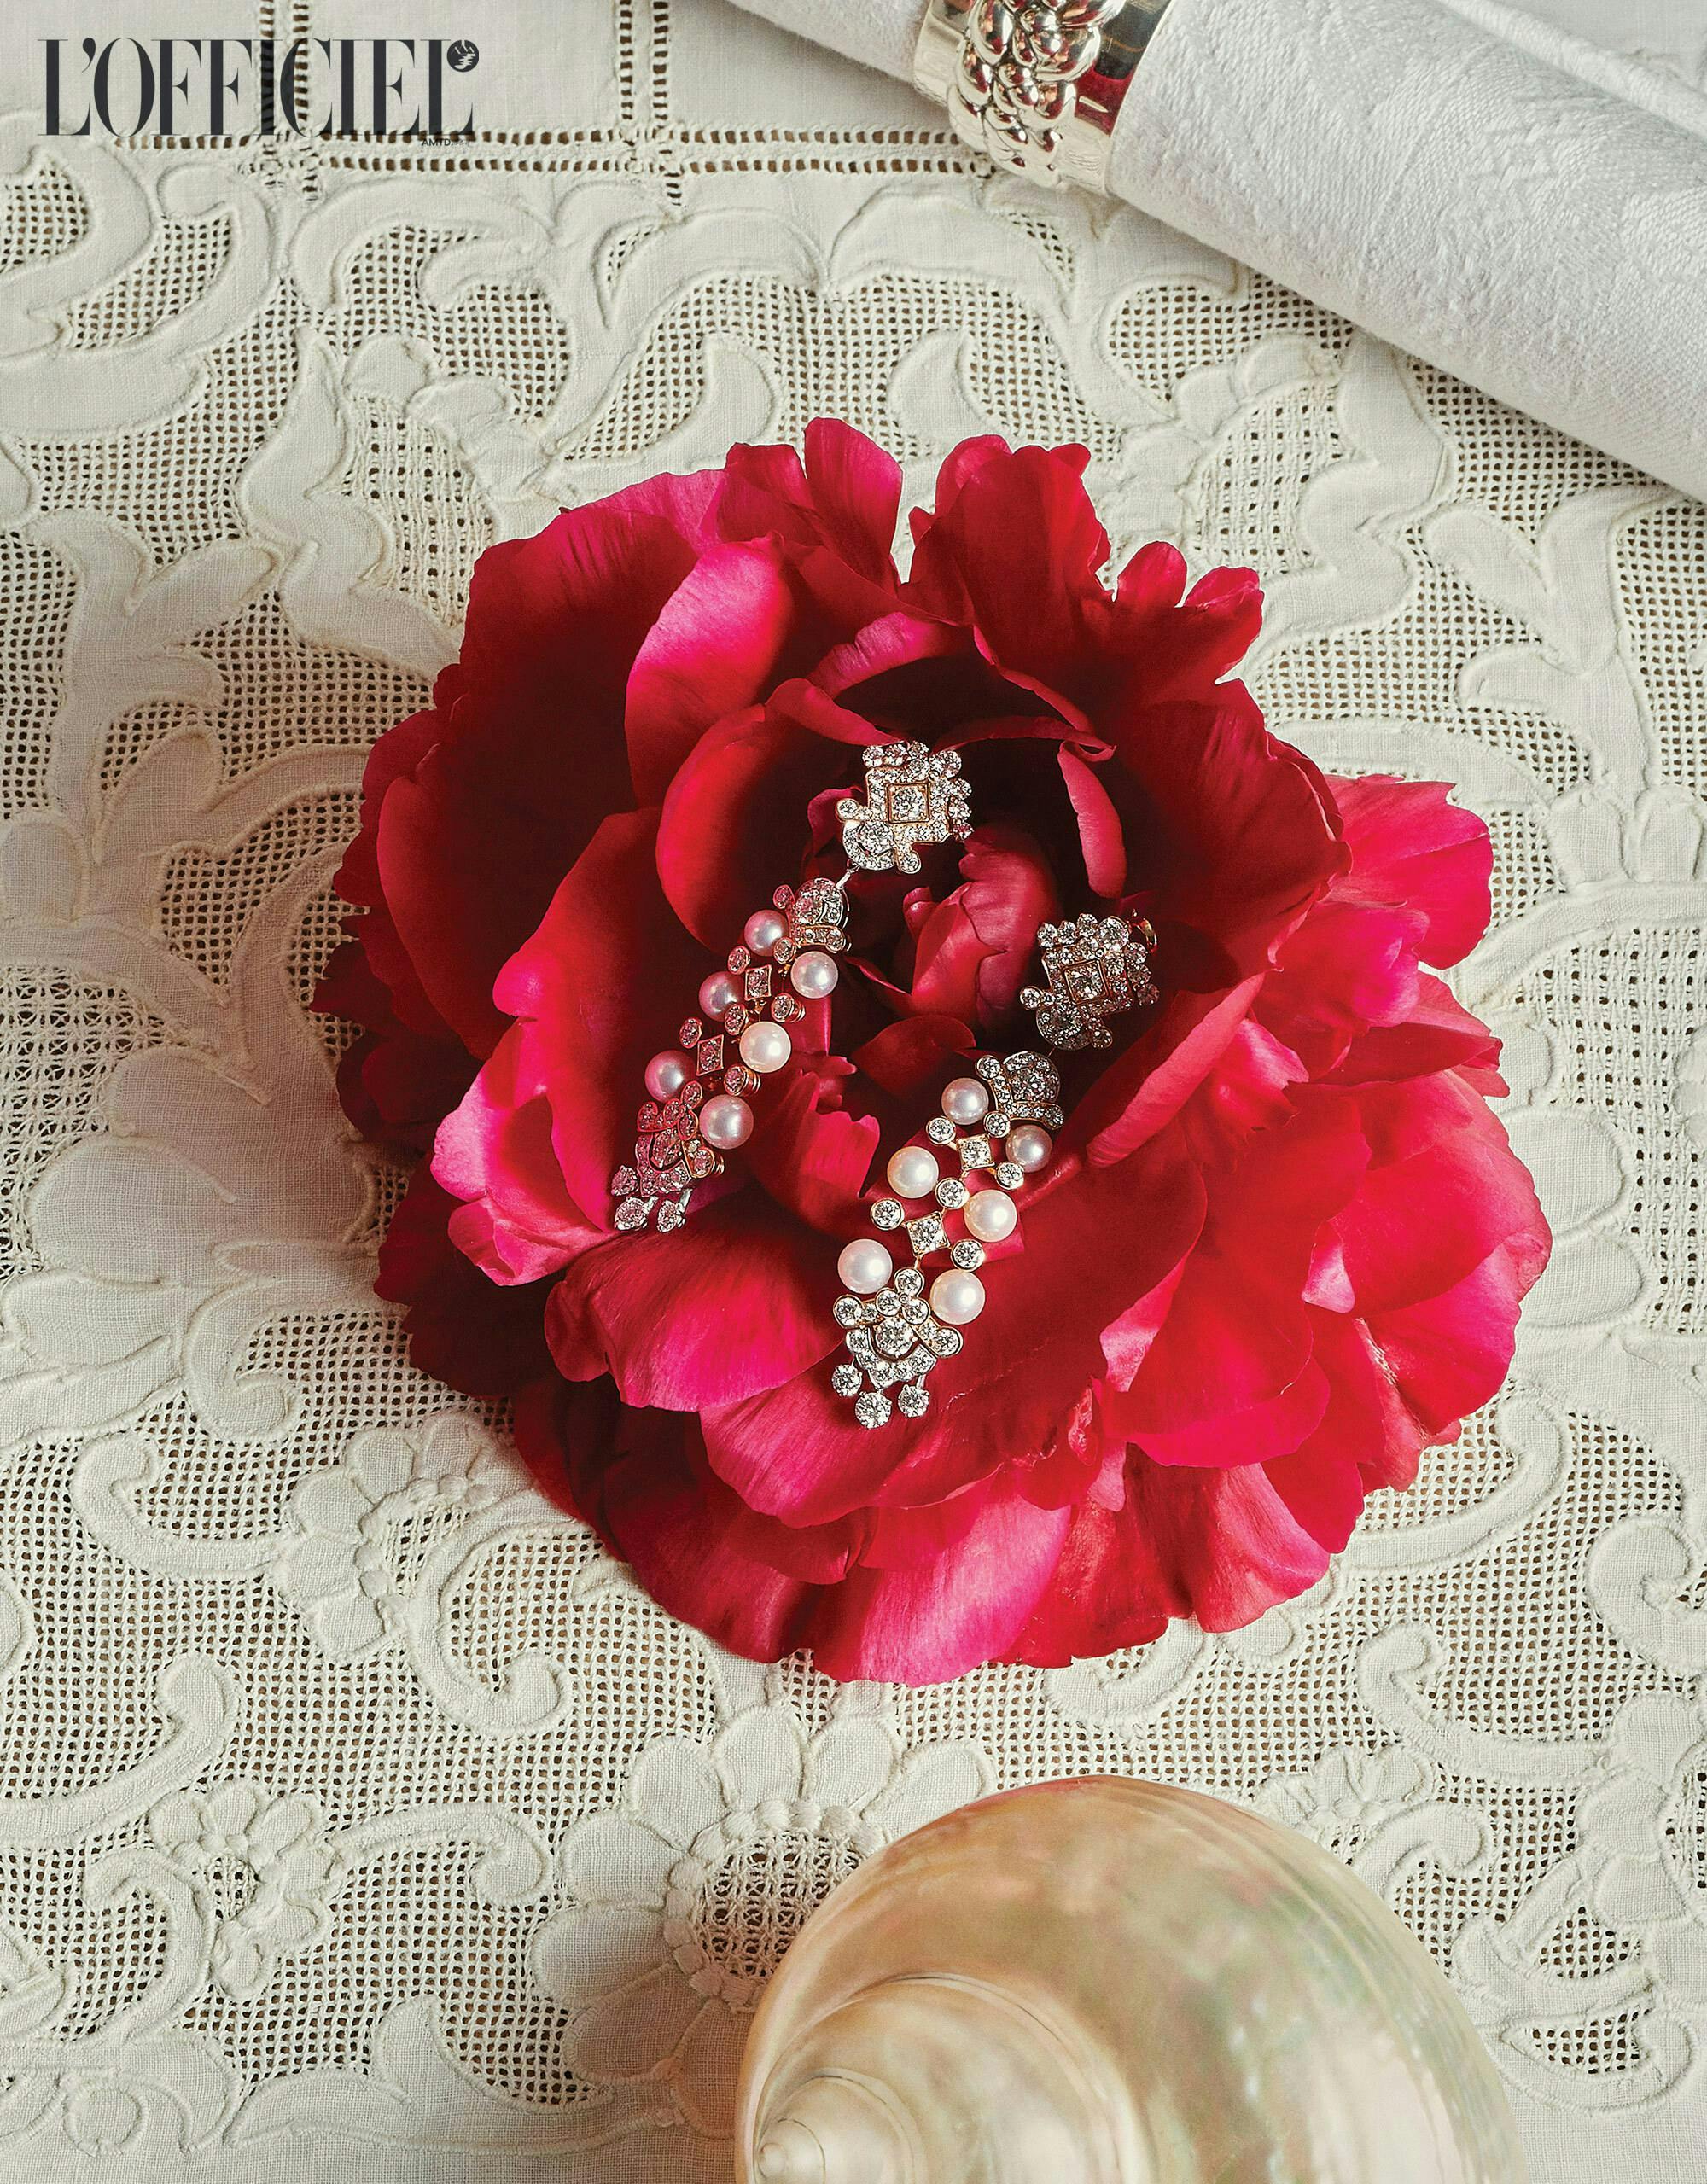 pearl and diamond earrings on rose